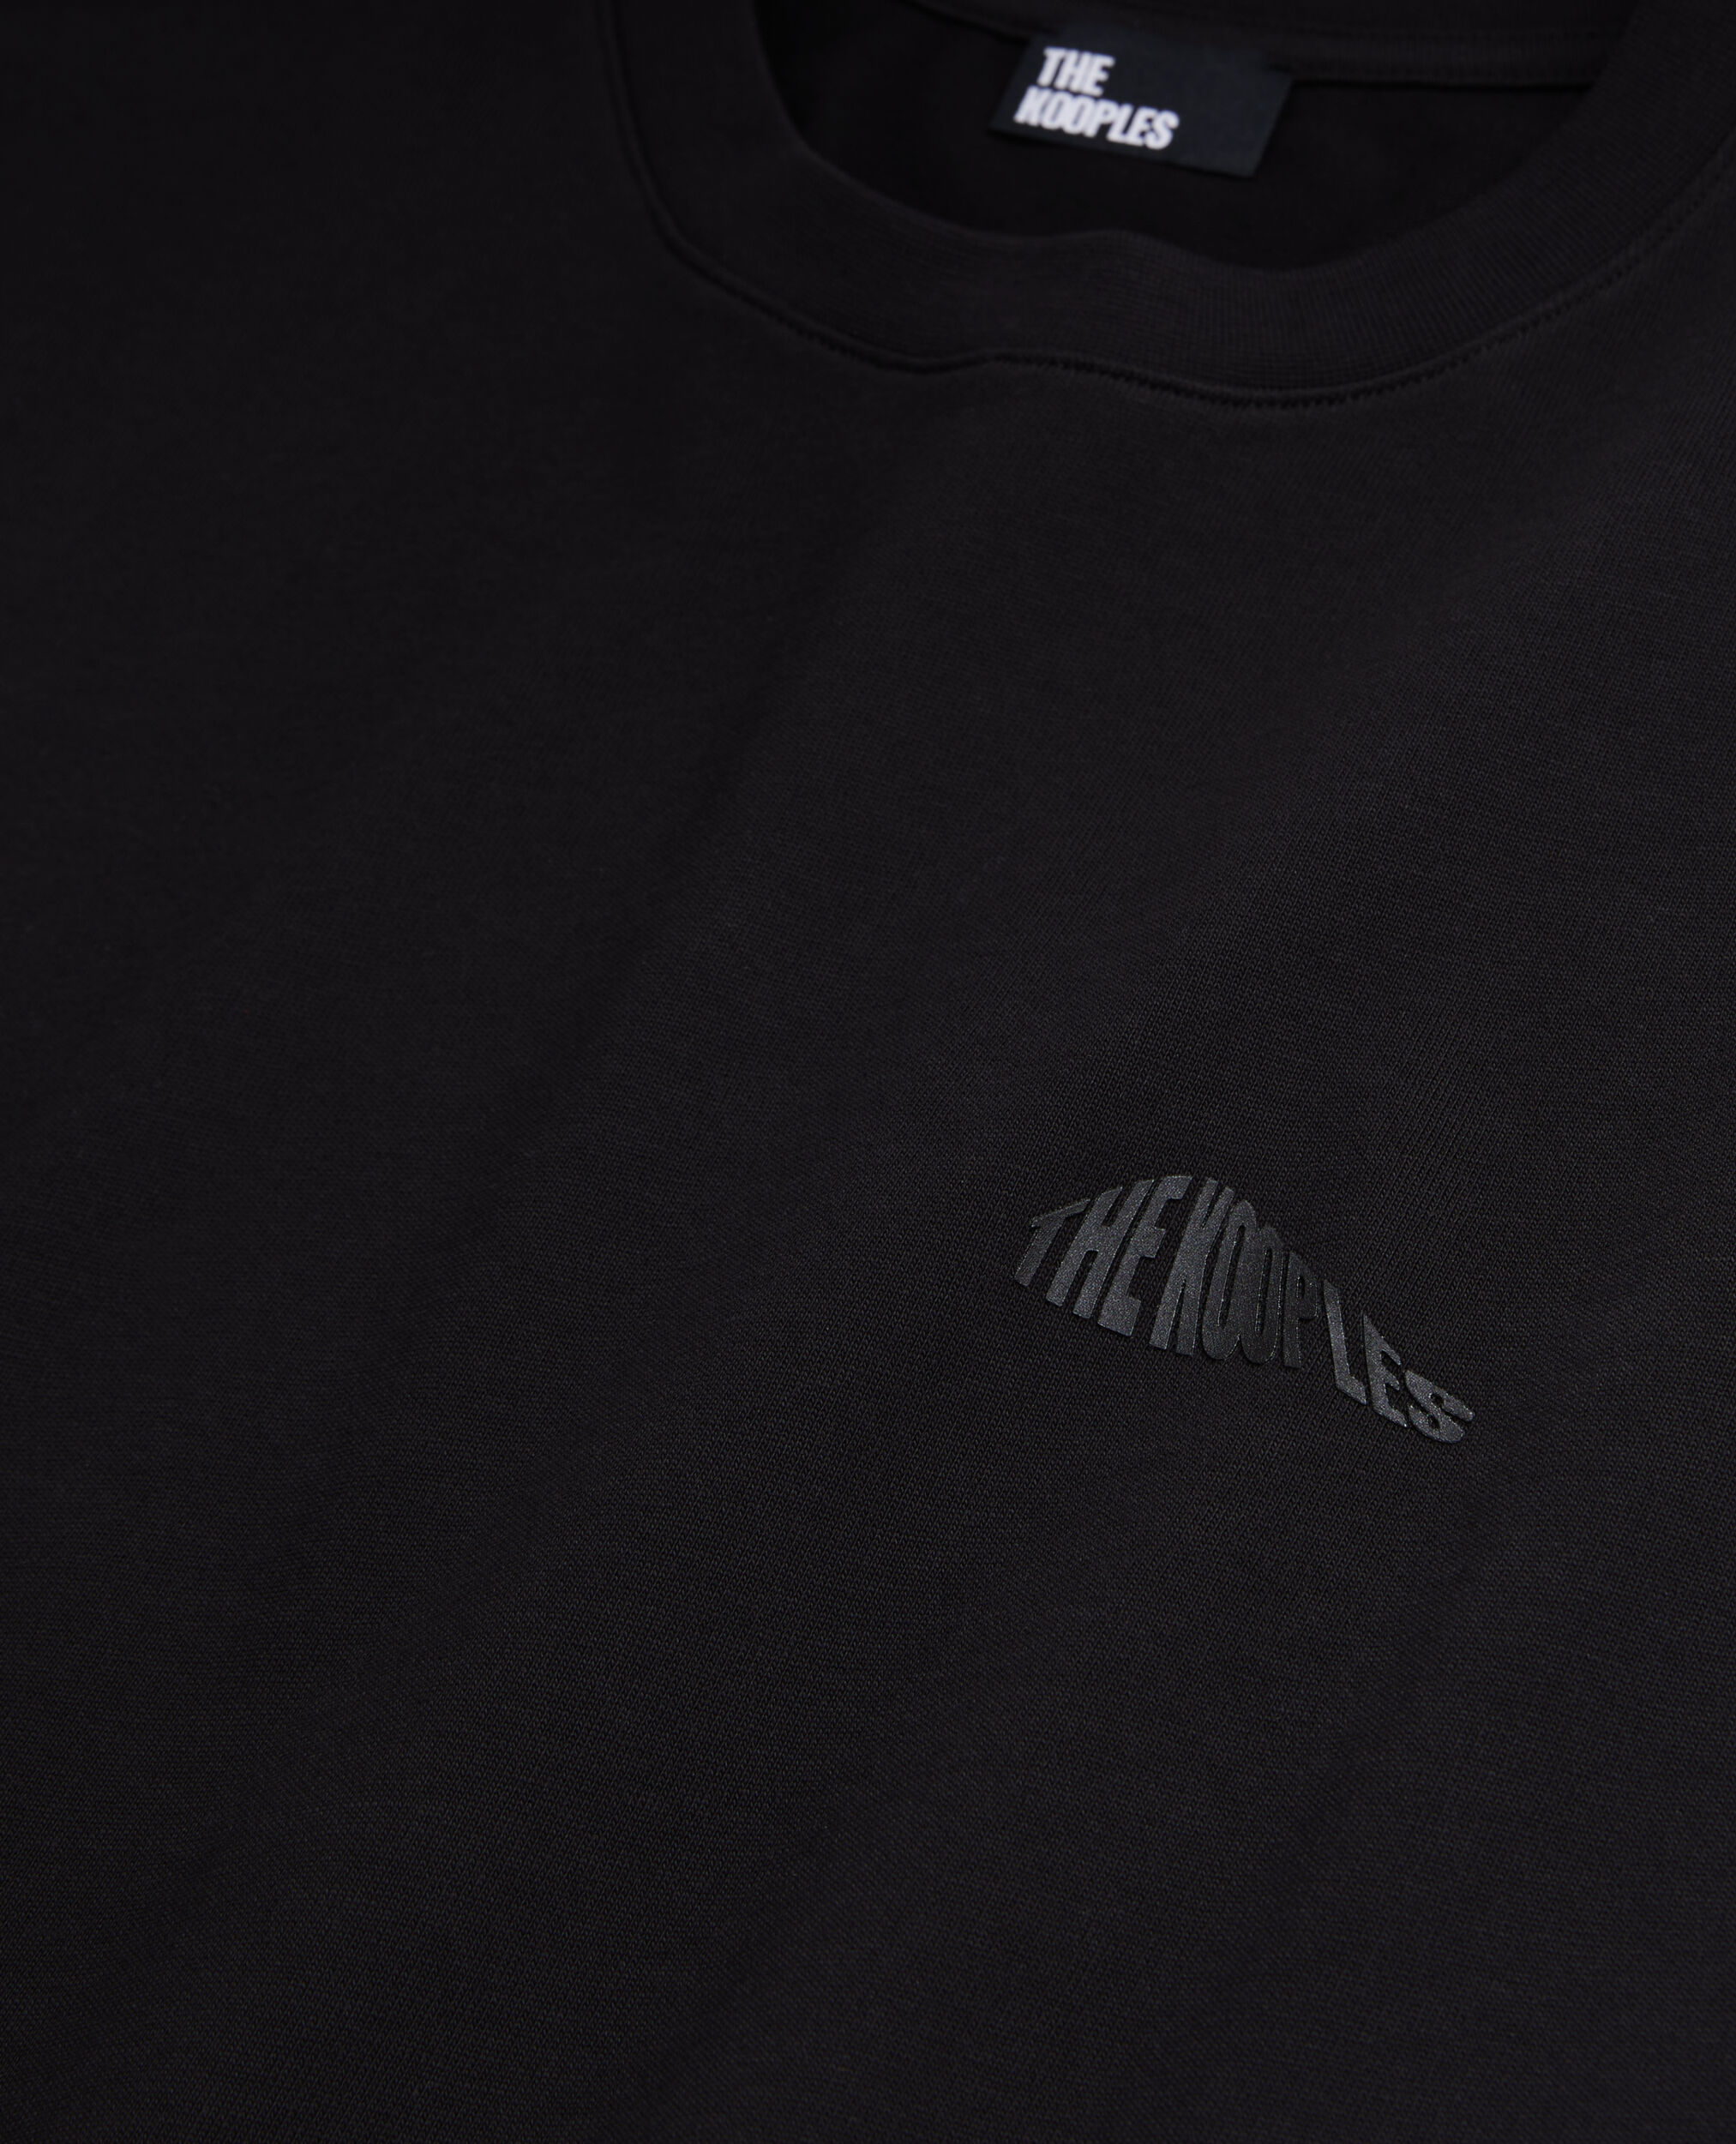 Men's black t-shirt with graphic logo serigraphy, BLACK, hi-res image number null